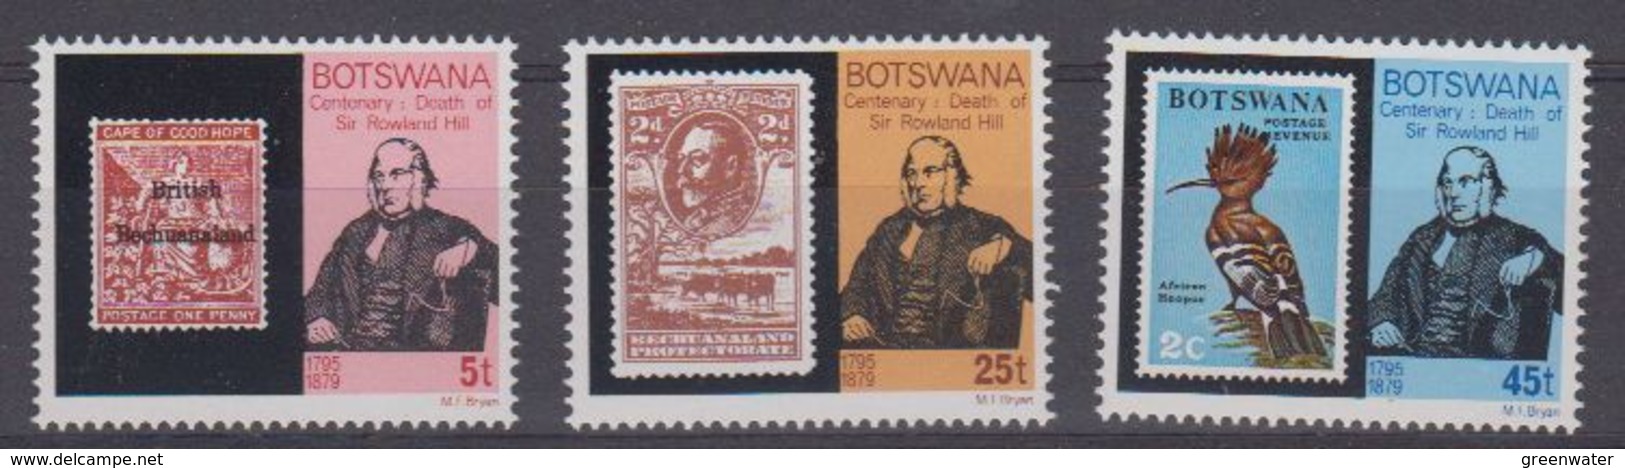 Botswana 1979 Sir Rowland Hill 3v ** Mnh (42552) - Botswana (1966-...)